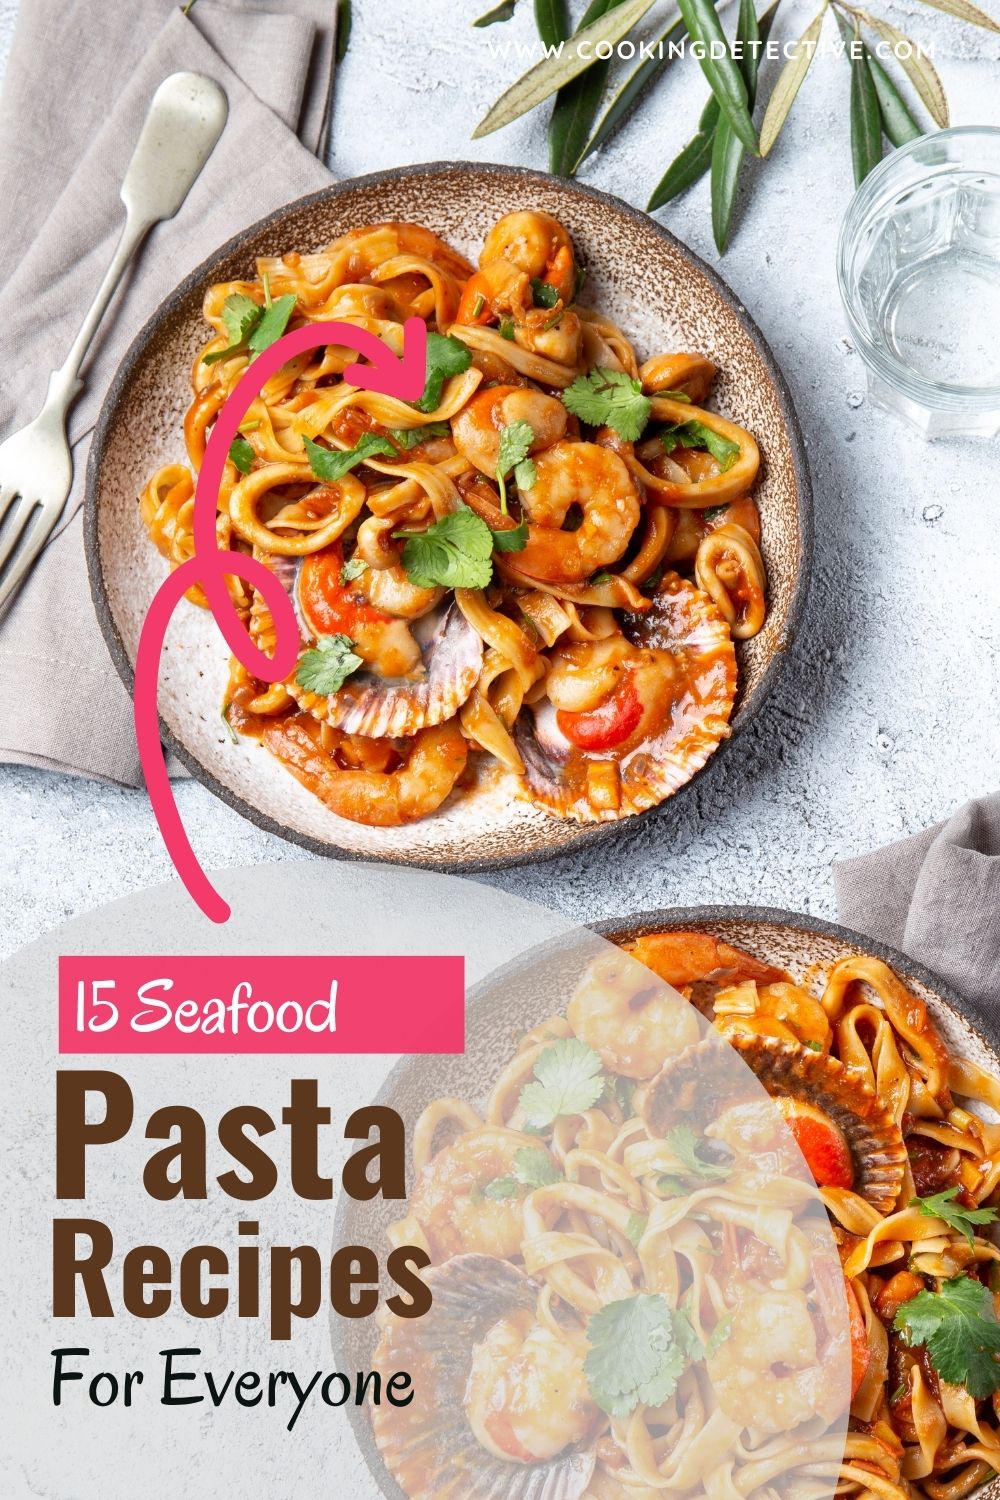 Seafood Pasta Recipes